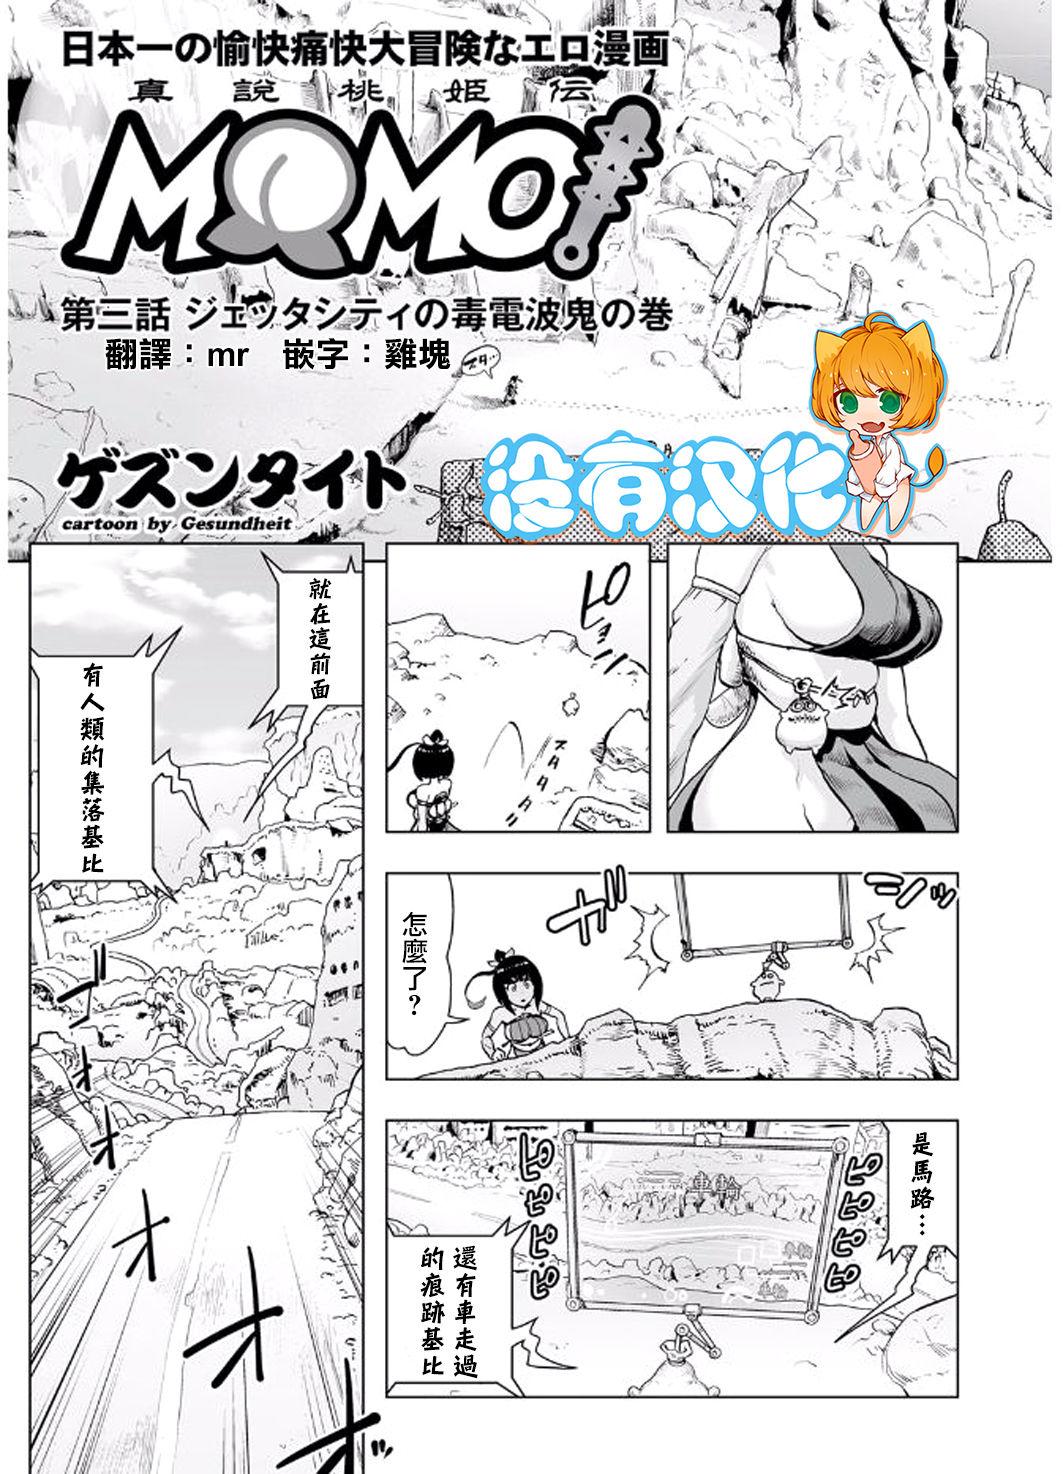 Realitykings MOMO! Daisanwa Jetta City no Dokudenpa Oni no Maki Blondes - Page 3